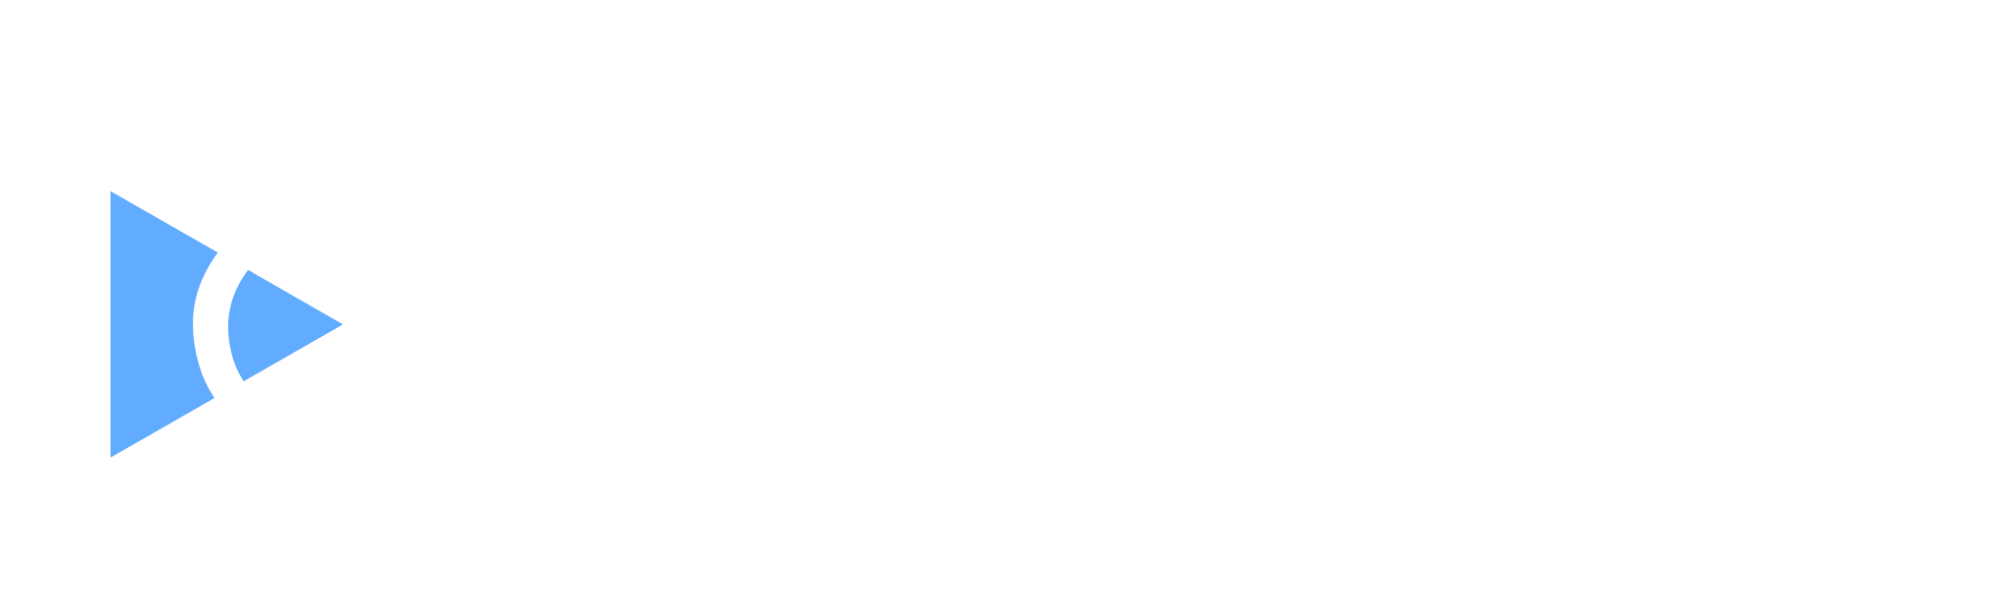 Bride and Cut logo transparent